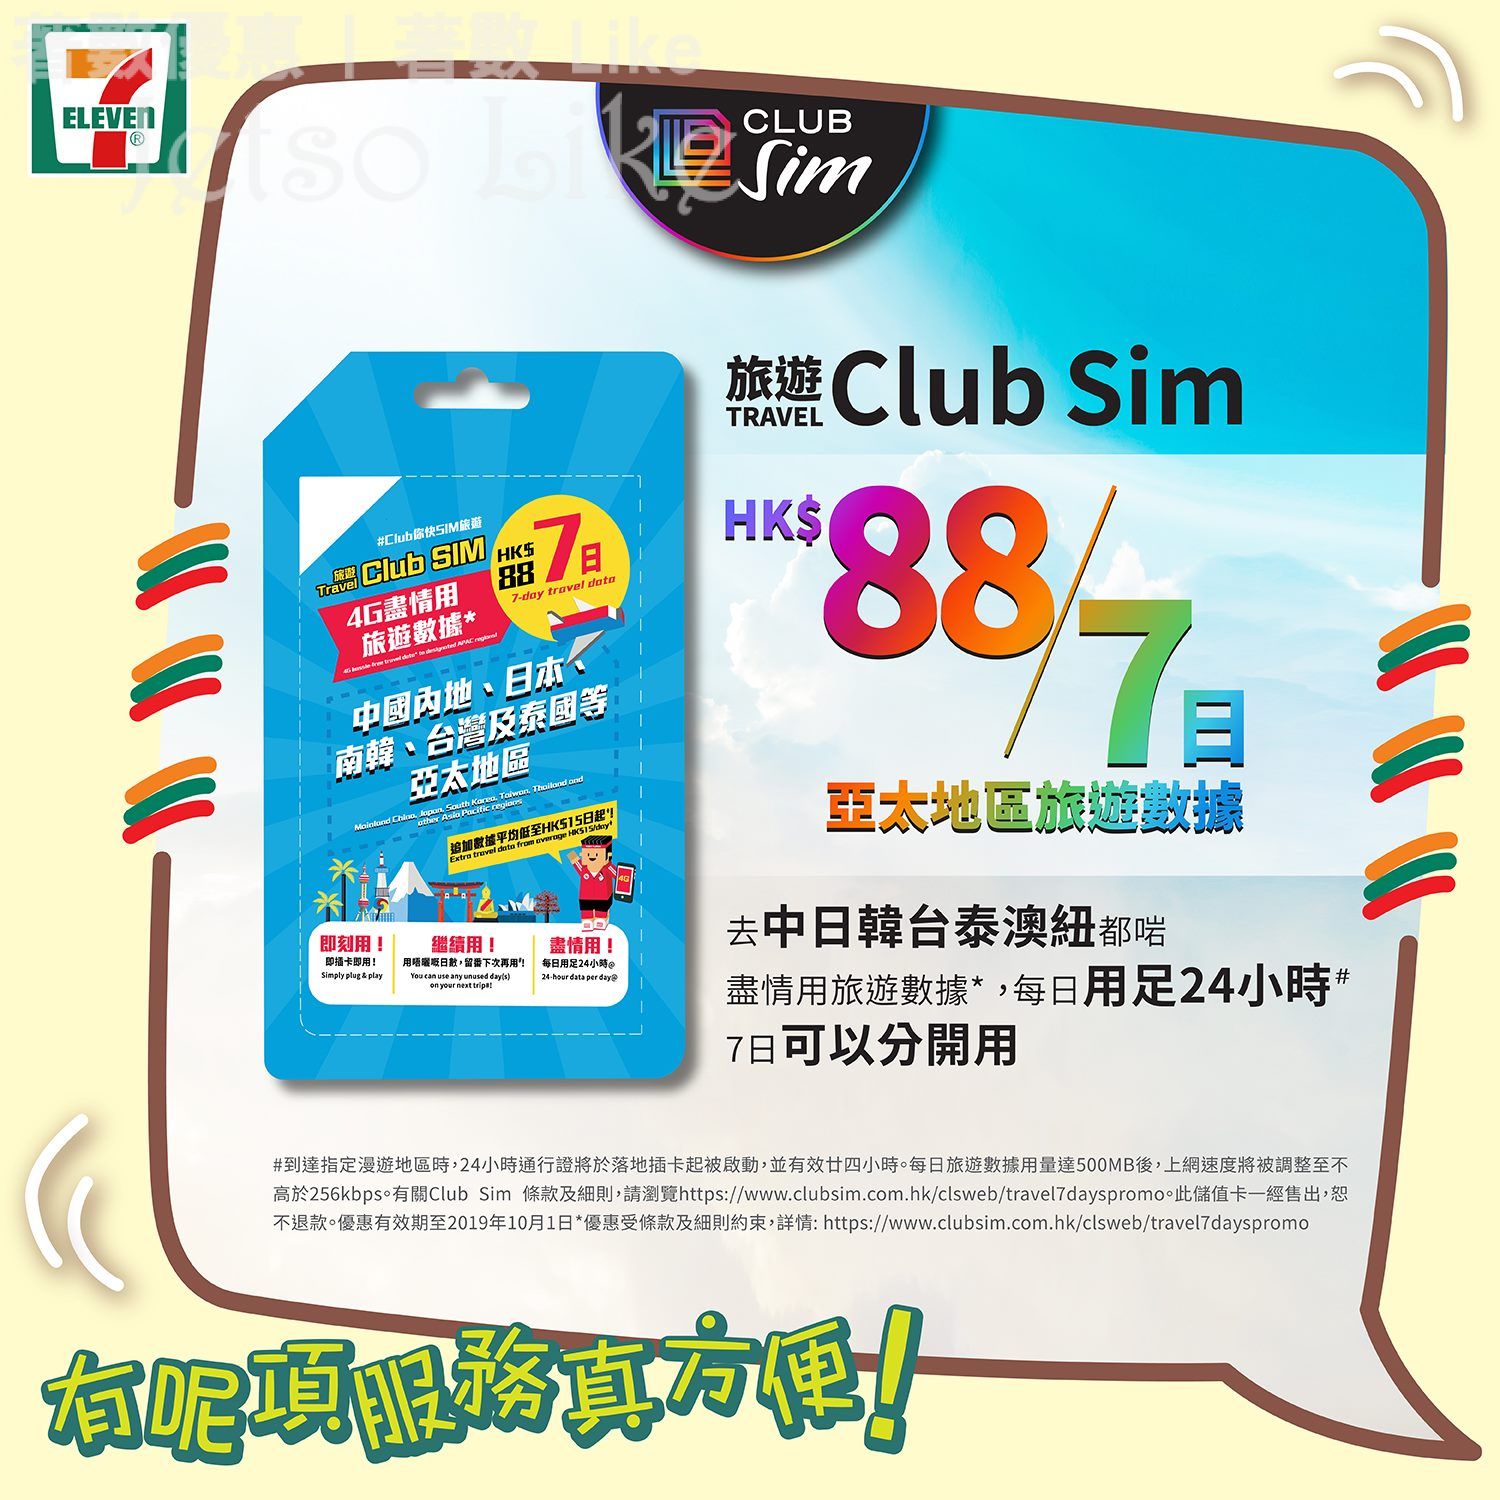 7-Eleven Club Sim 7日旅遊數據 $88